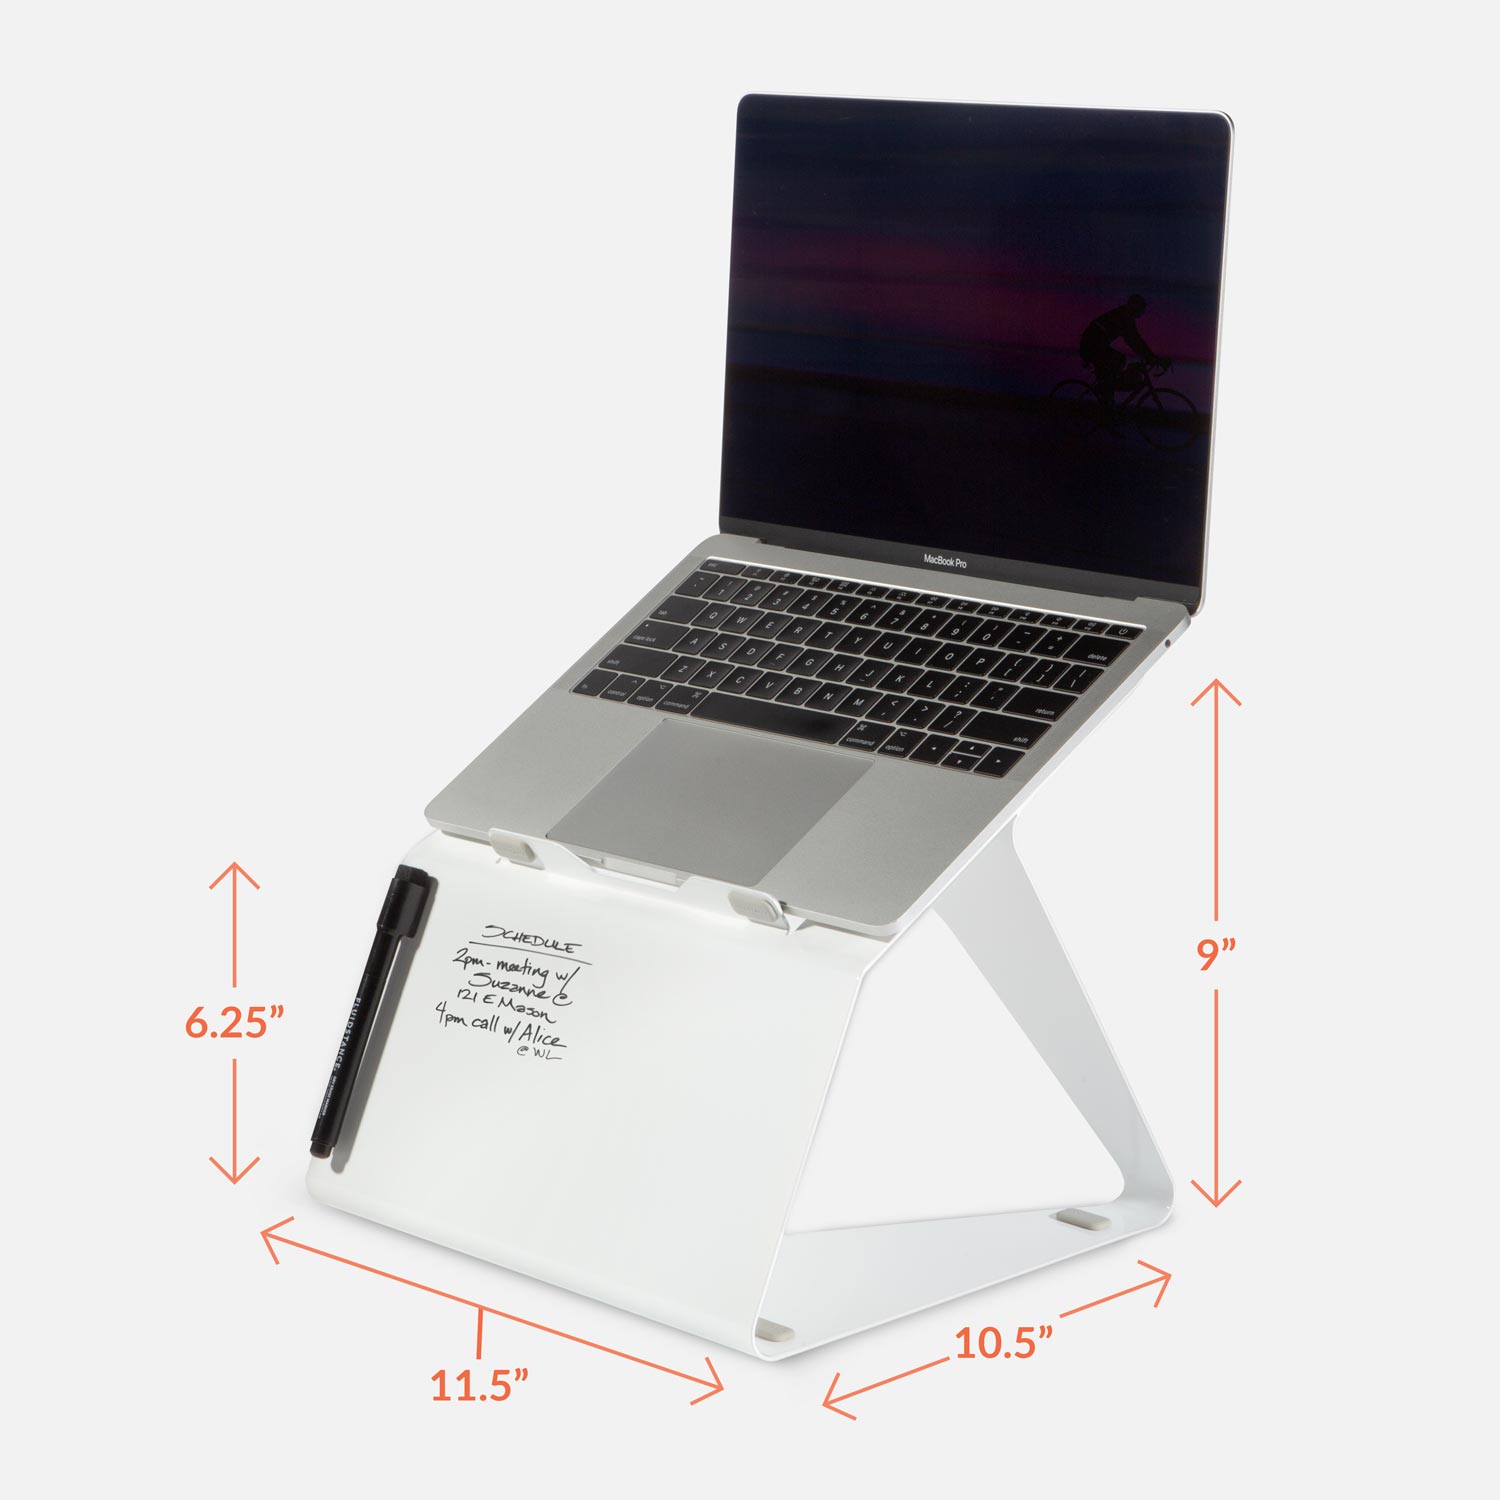 Fluidstance Accessories Lift Laptop Riser